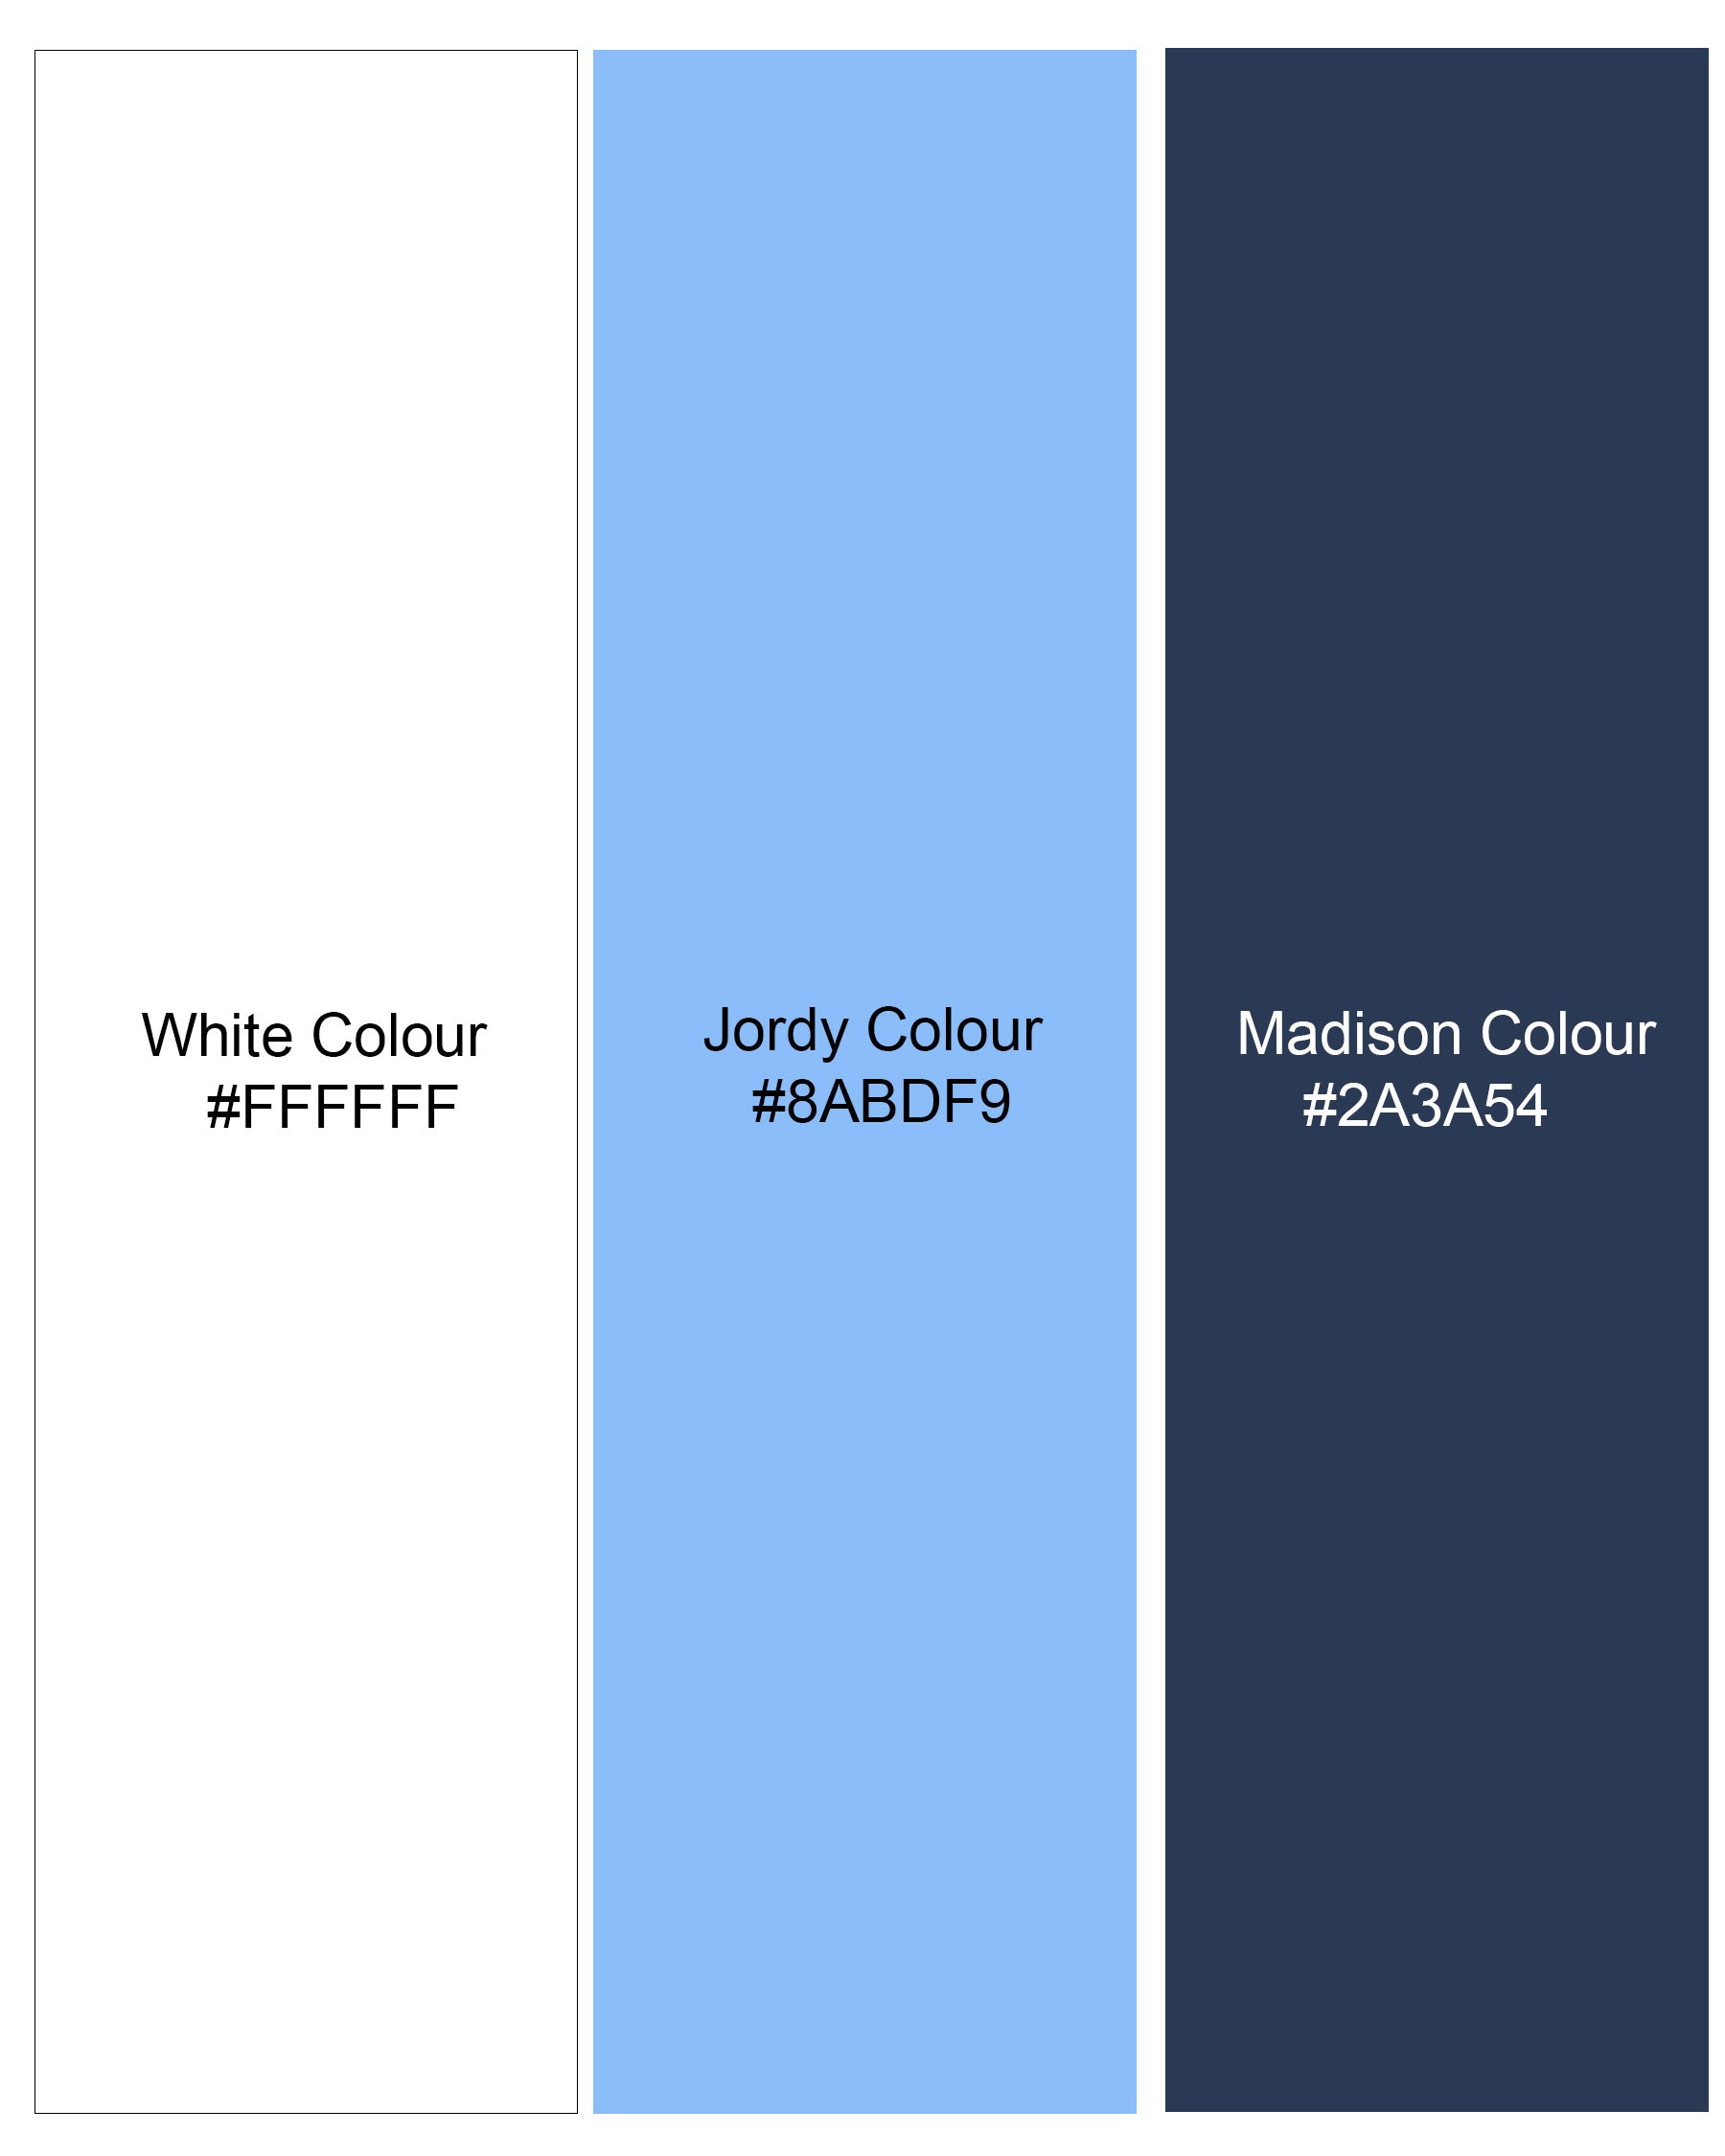 Bright White with Madison Blue Box Printed Luxurious Linen Shirt 8259-BLE-38, 8259-BLE-H-38, 8259-BLE-39, 8259-BLE-H-39, 8259-BLE-40, 8259-BLE-H-40, 8259-BLE-42, 8259-BLE-H-42, 8259-BLE-44, 8259-BLE-H-44, 8259-BLE-46, 8259-BLE-H-46, 8259-BLE-48, 8259-BLE-H-48, 8259-BLE-50, 8259-BLE-H-50, 8259-BLE-52, 8259-BLE-H-52